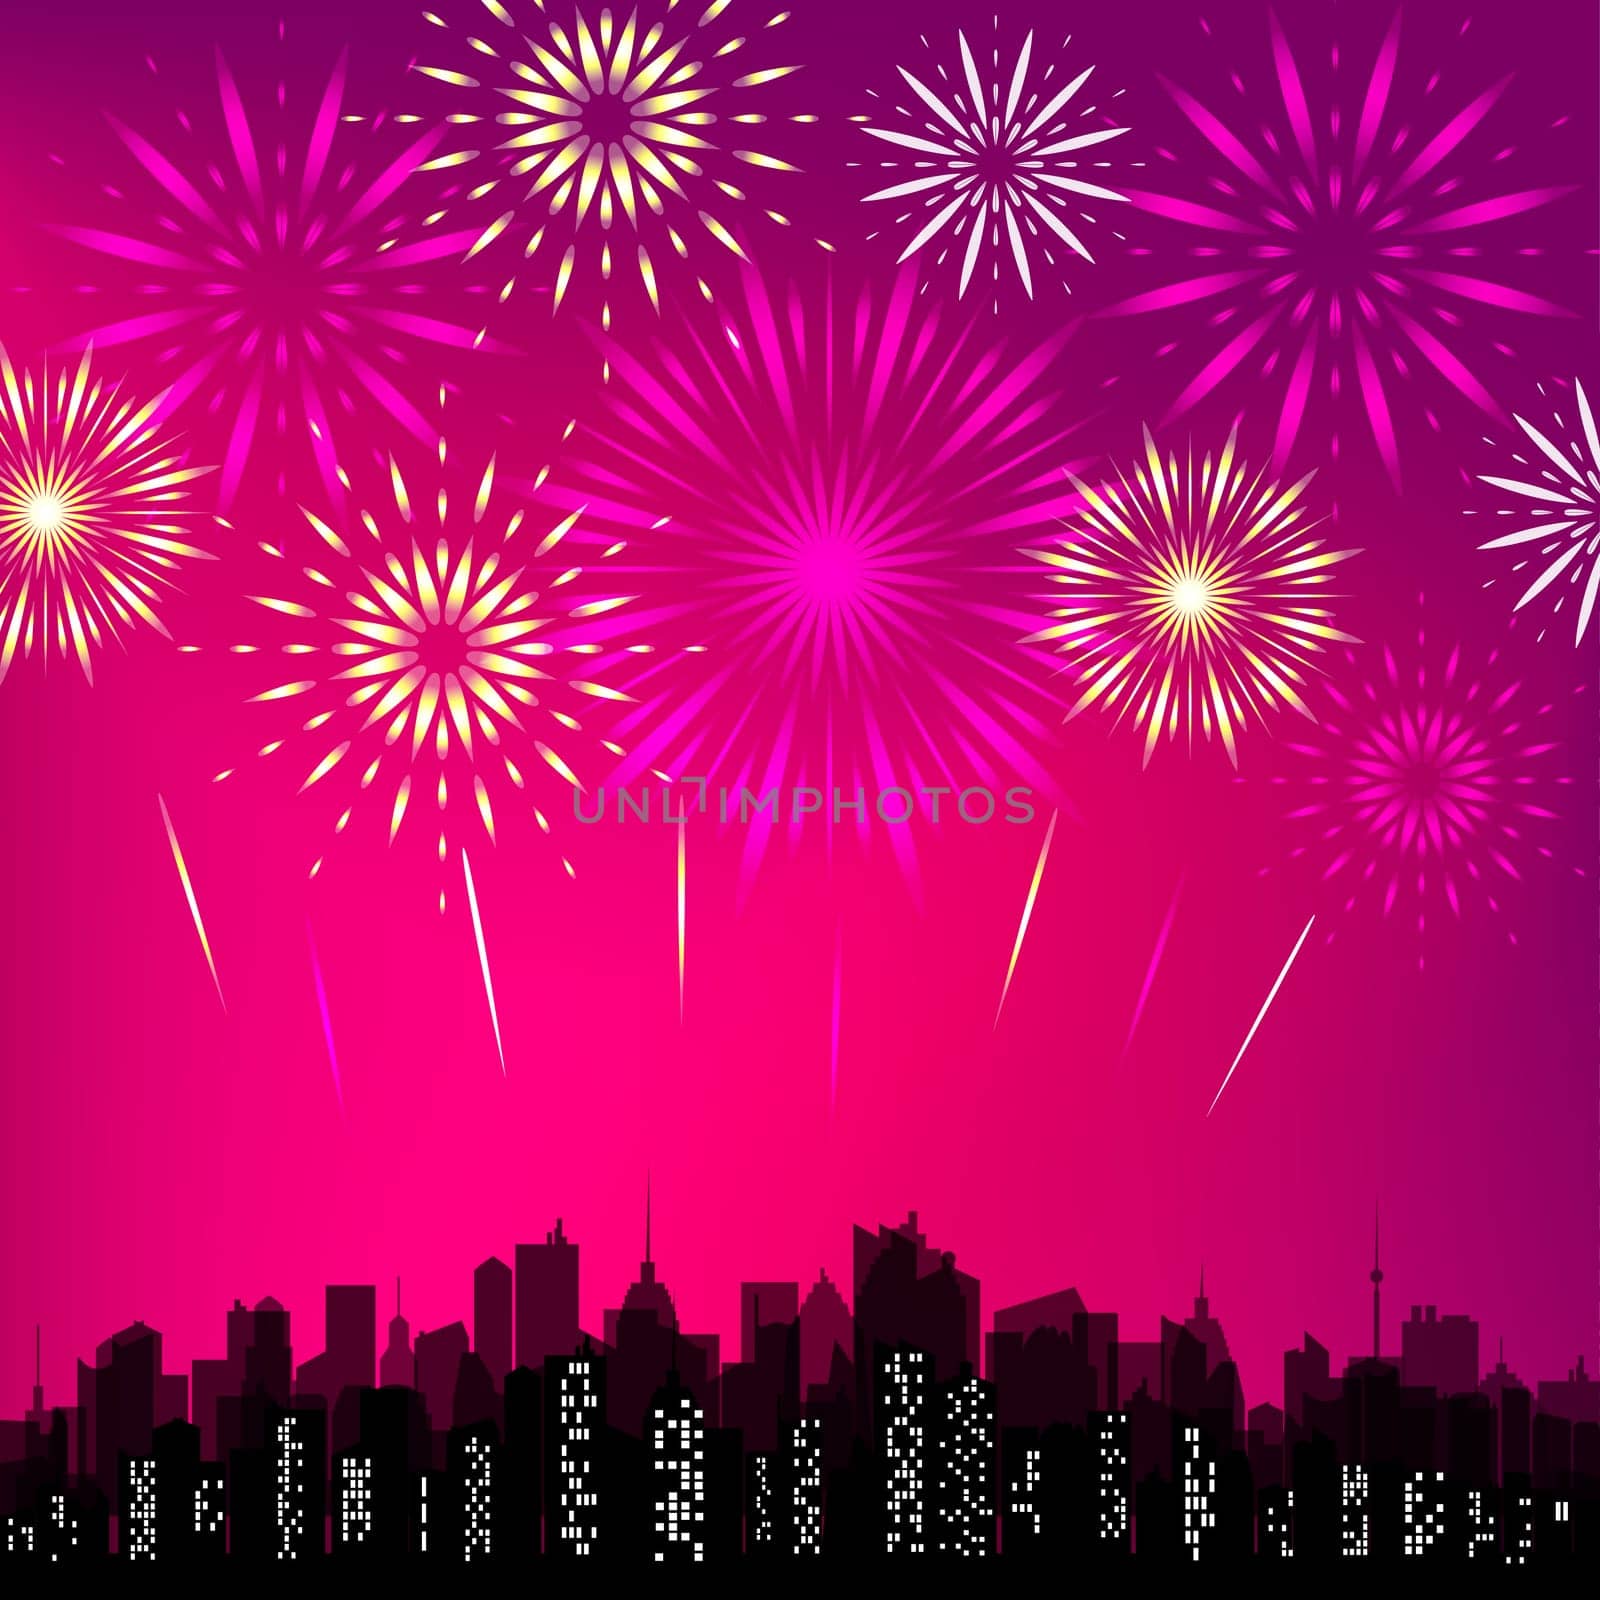 City skyline with festive fireworks. Glowing light over the city. Holiday cityscape jpeg illustration.